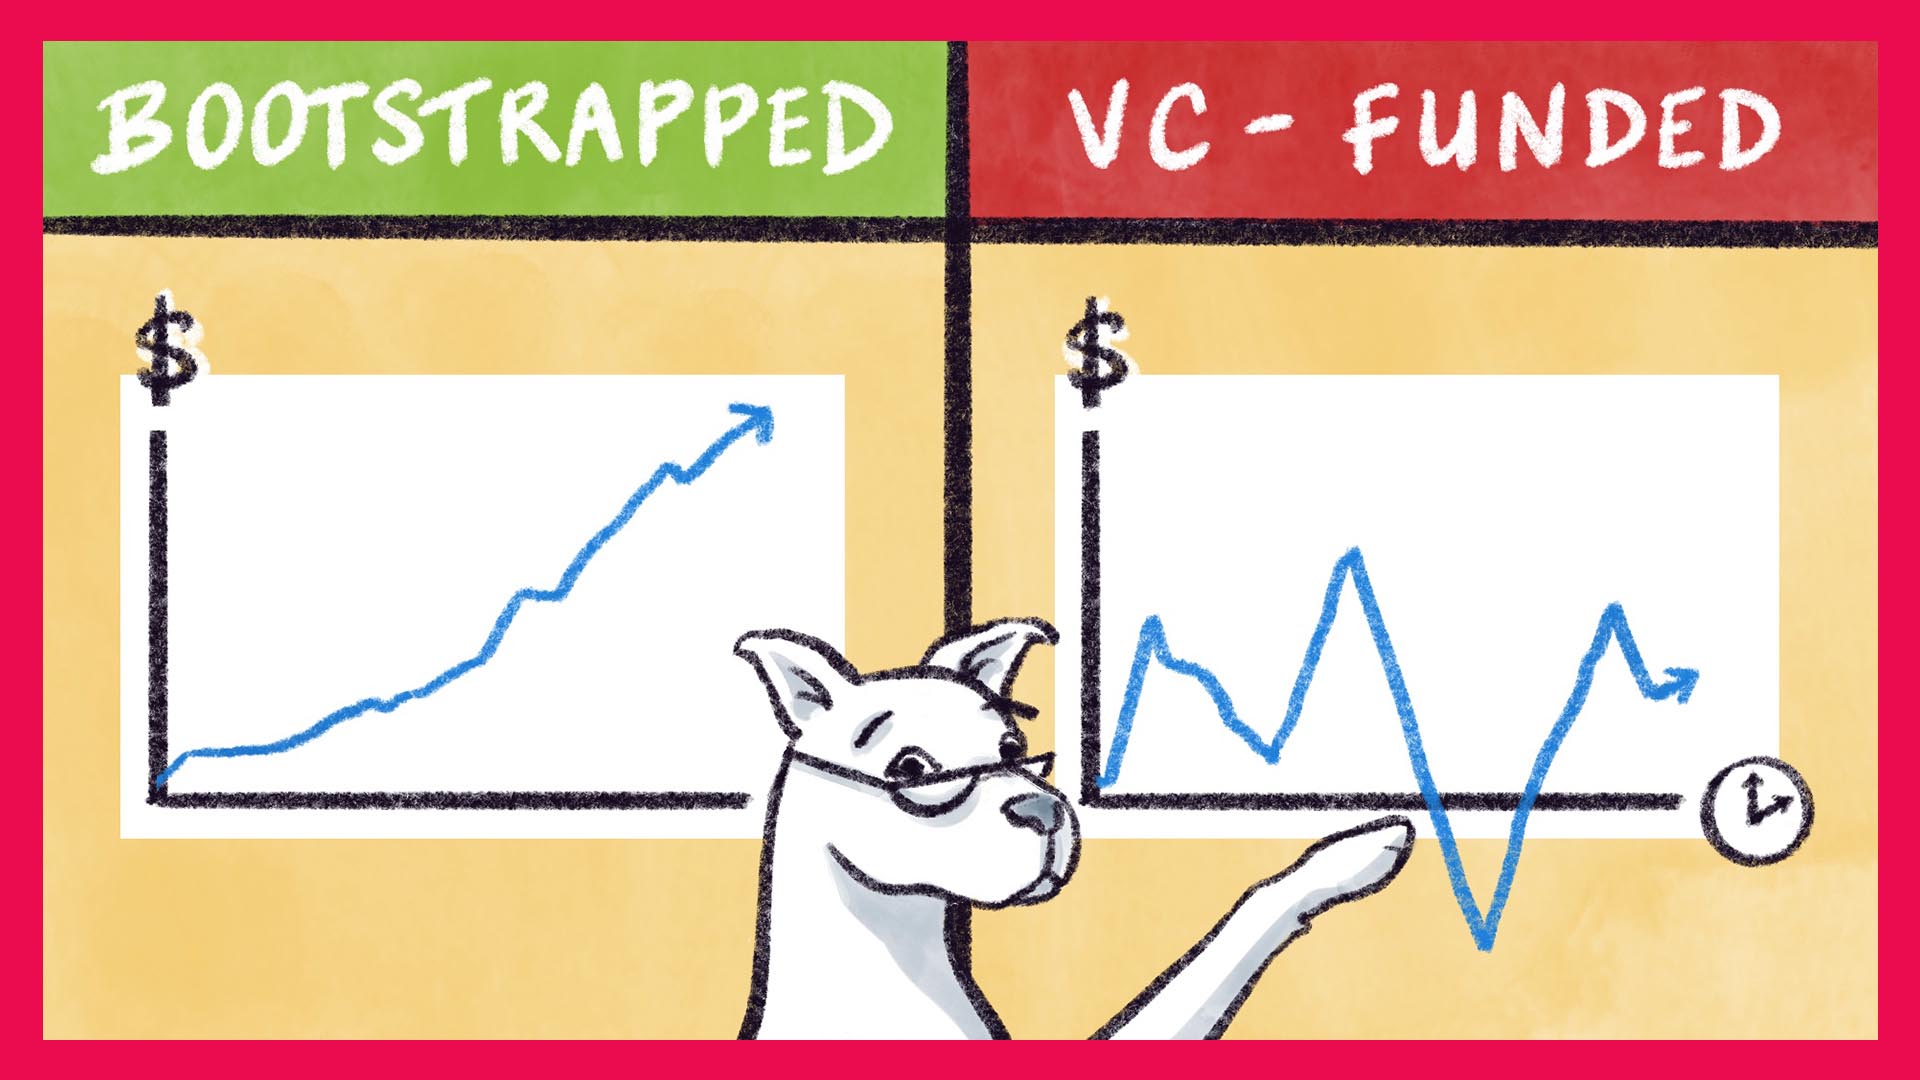 A cartoon dog points at a graph showing a decrease